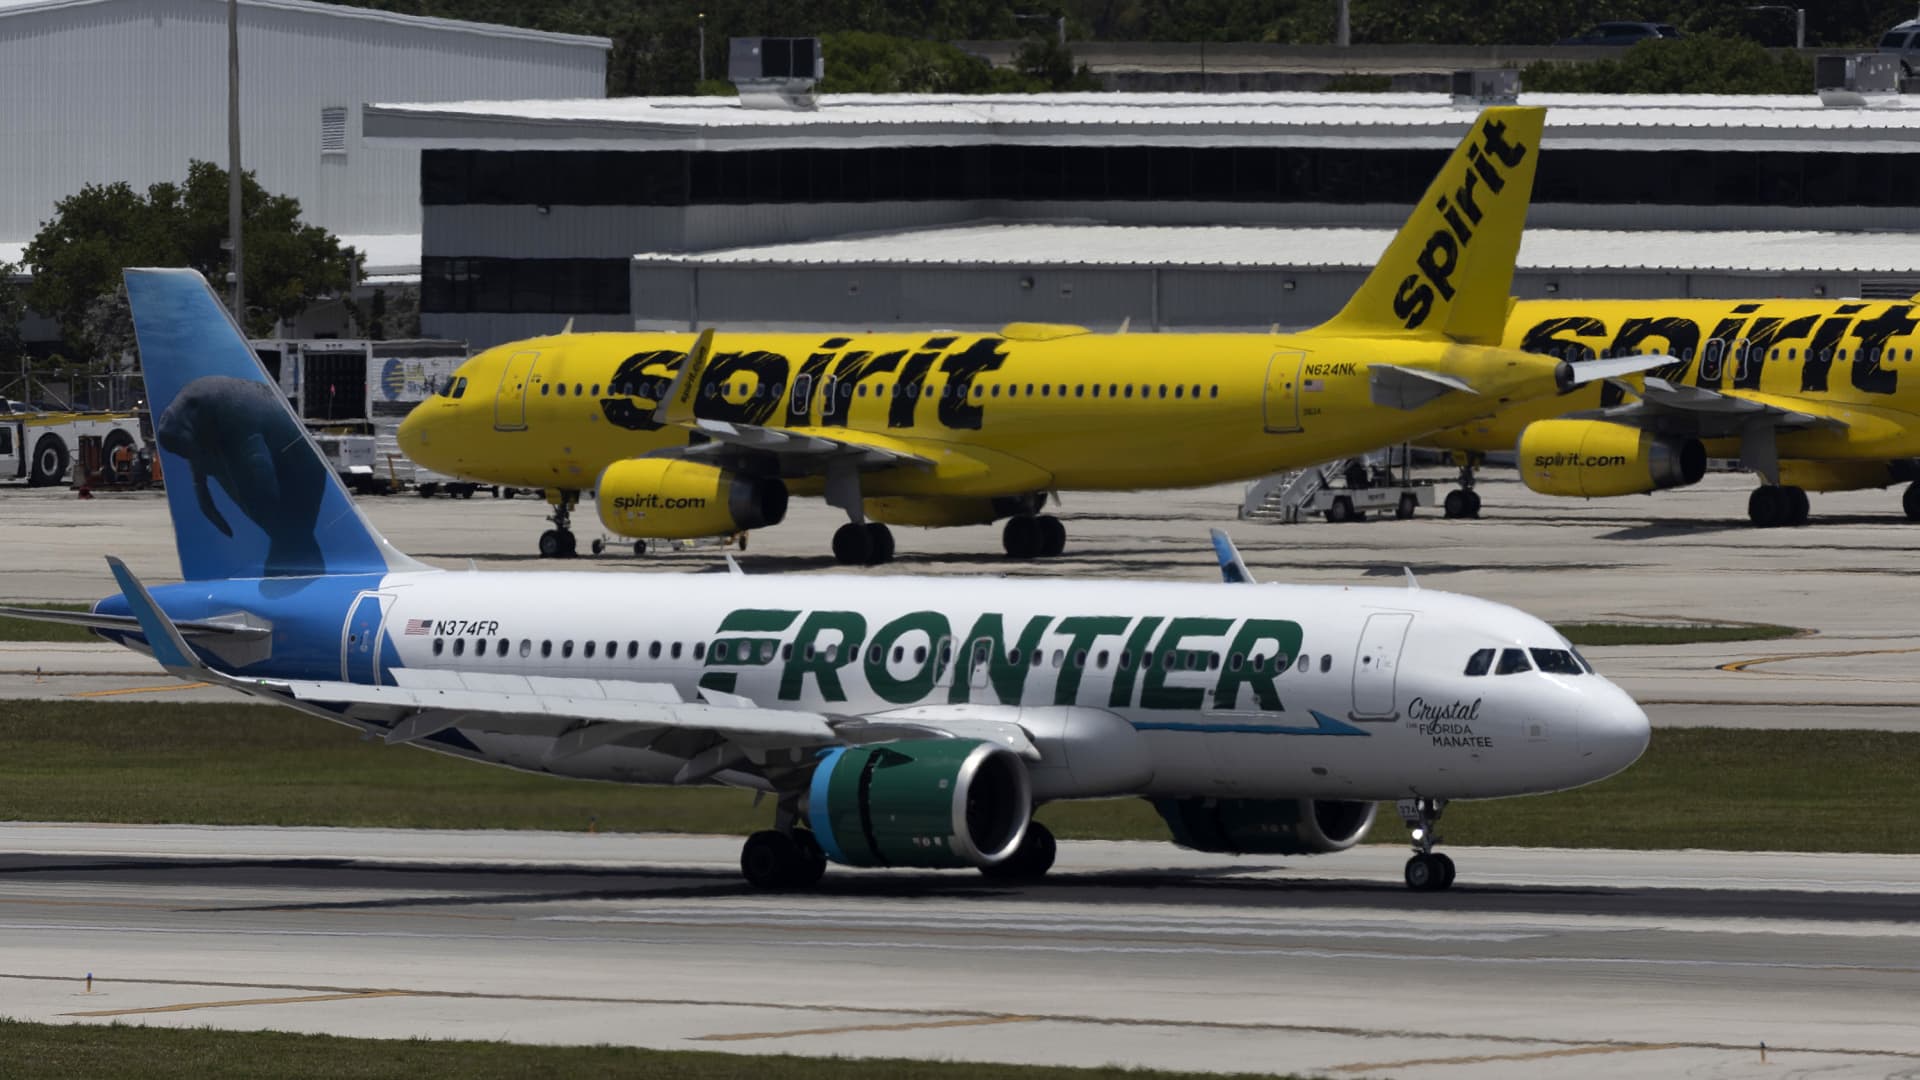 Frontier sweetens offer for Spirit Airlines merger as shareholder vote looms